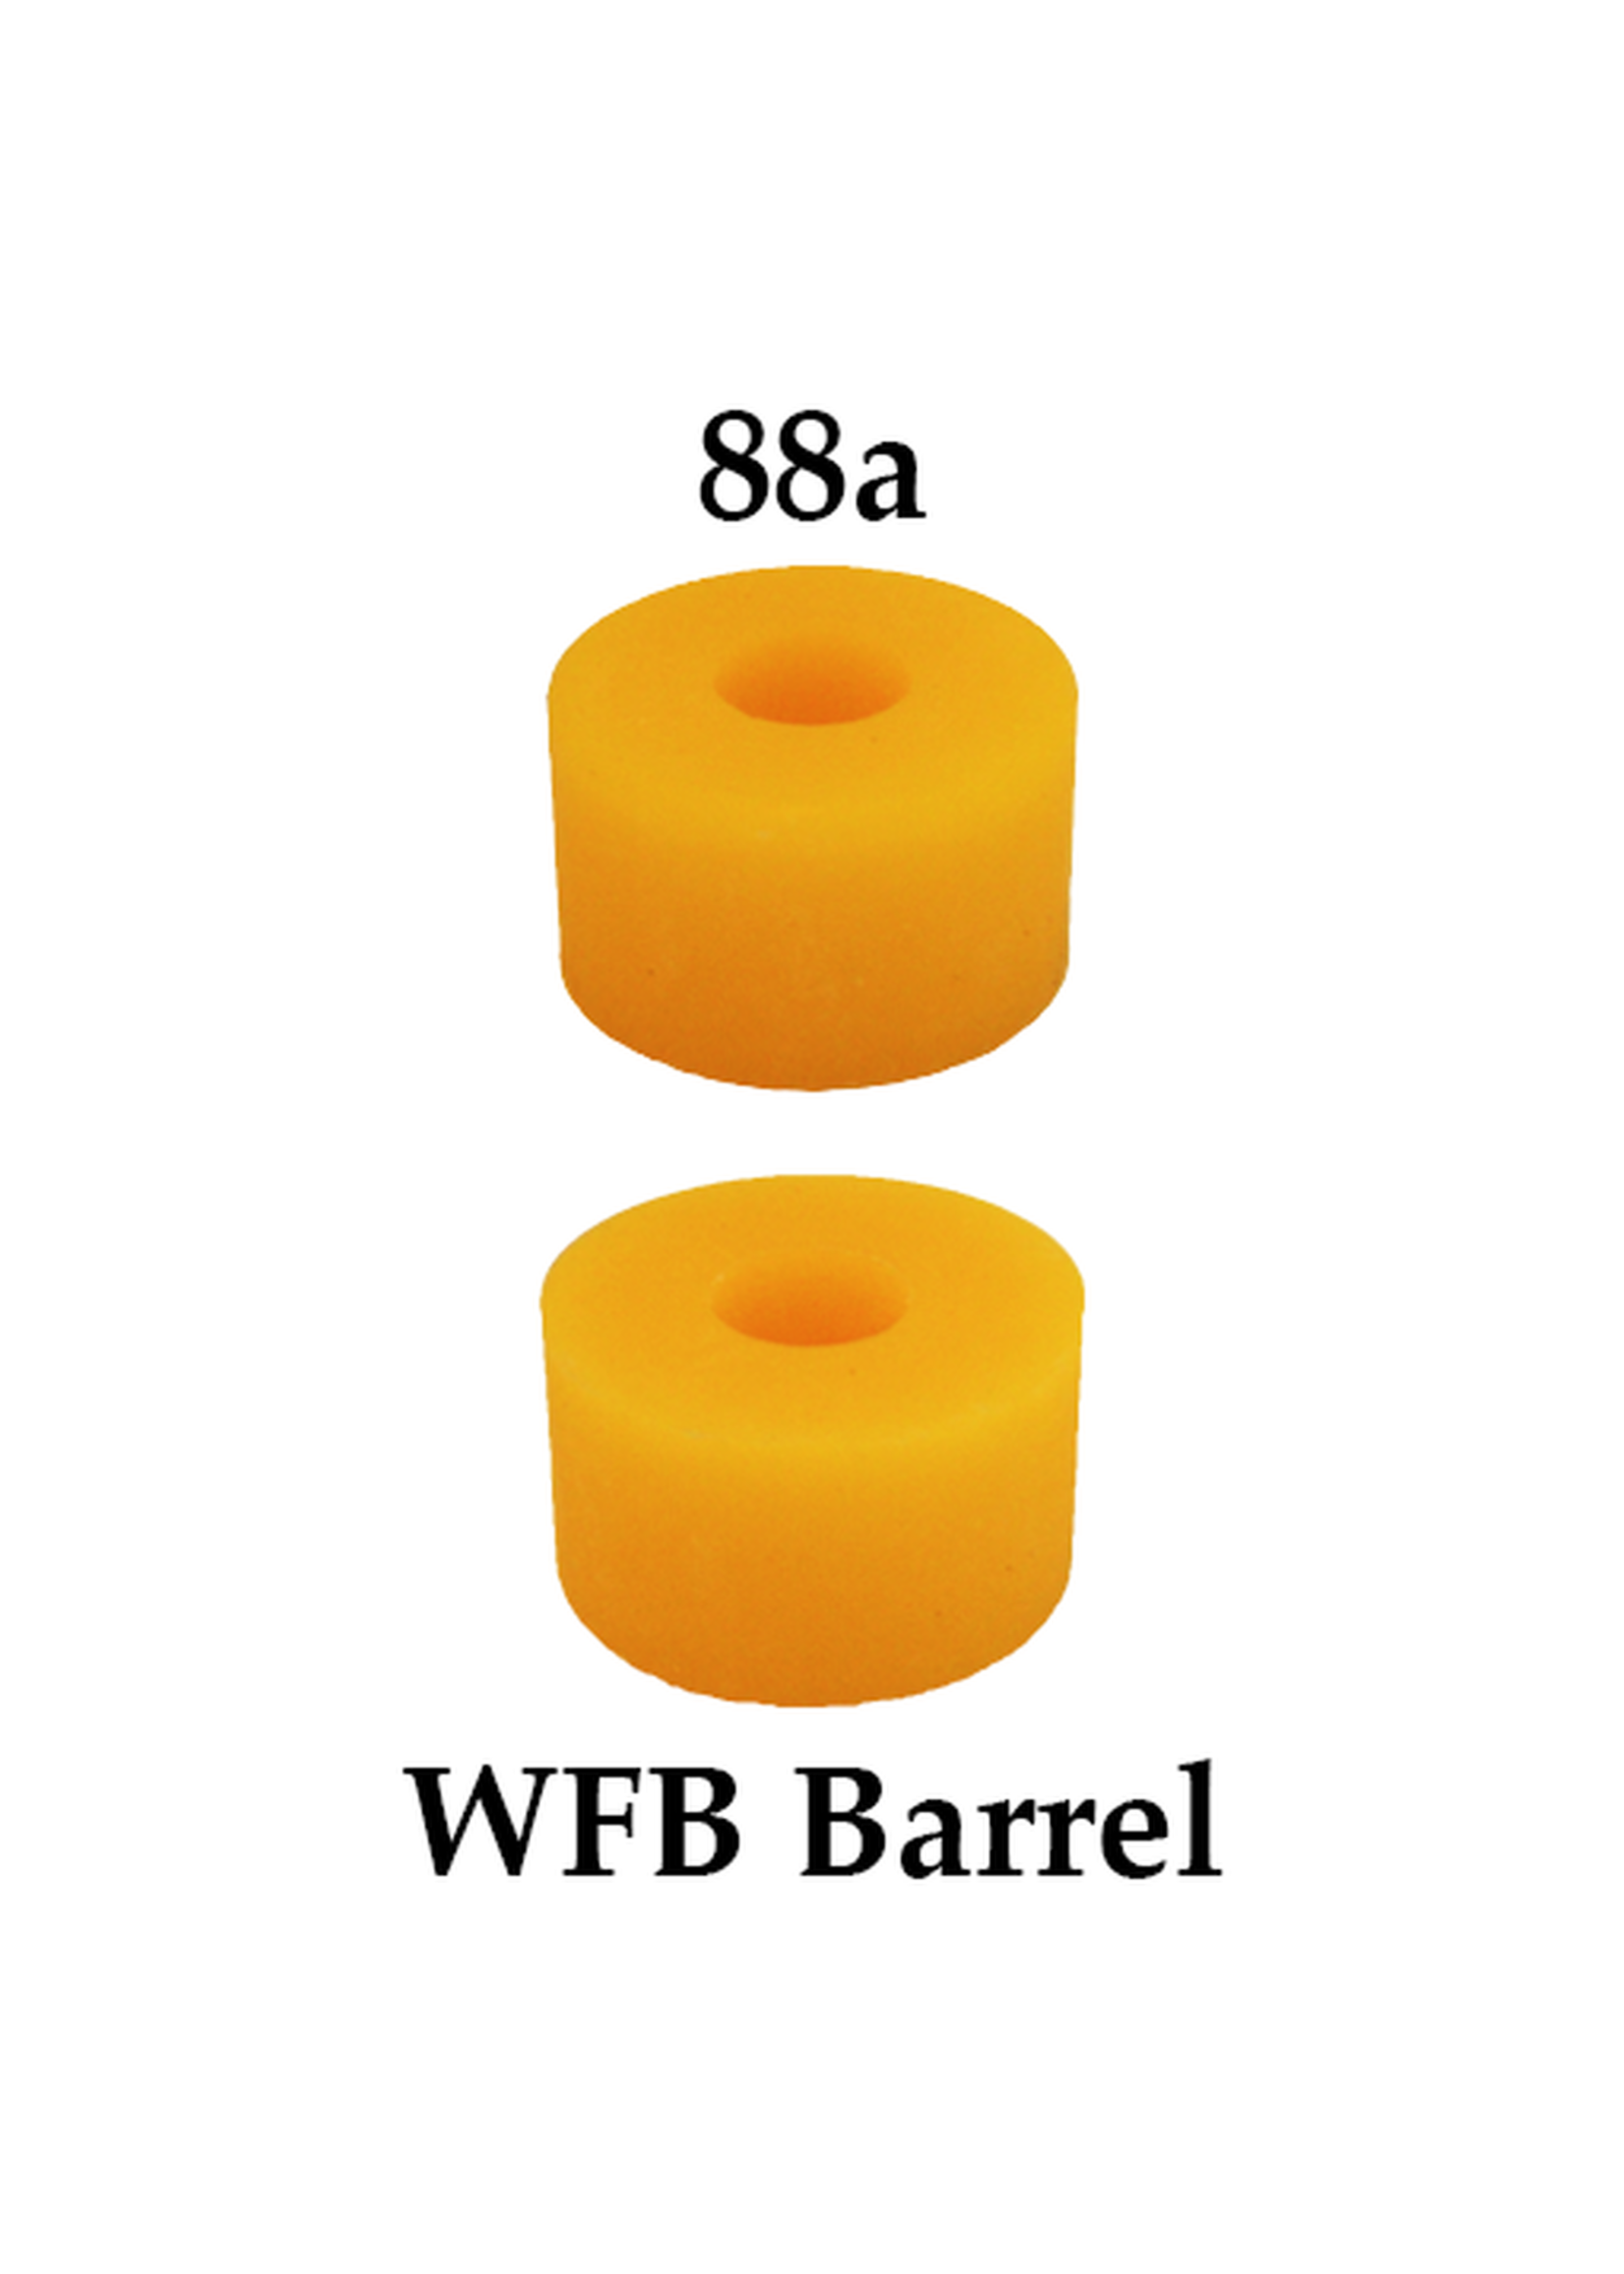 Riptide Sports WFB Barrel